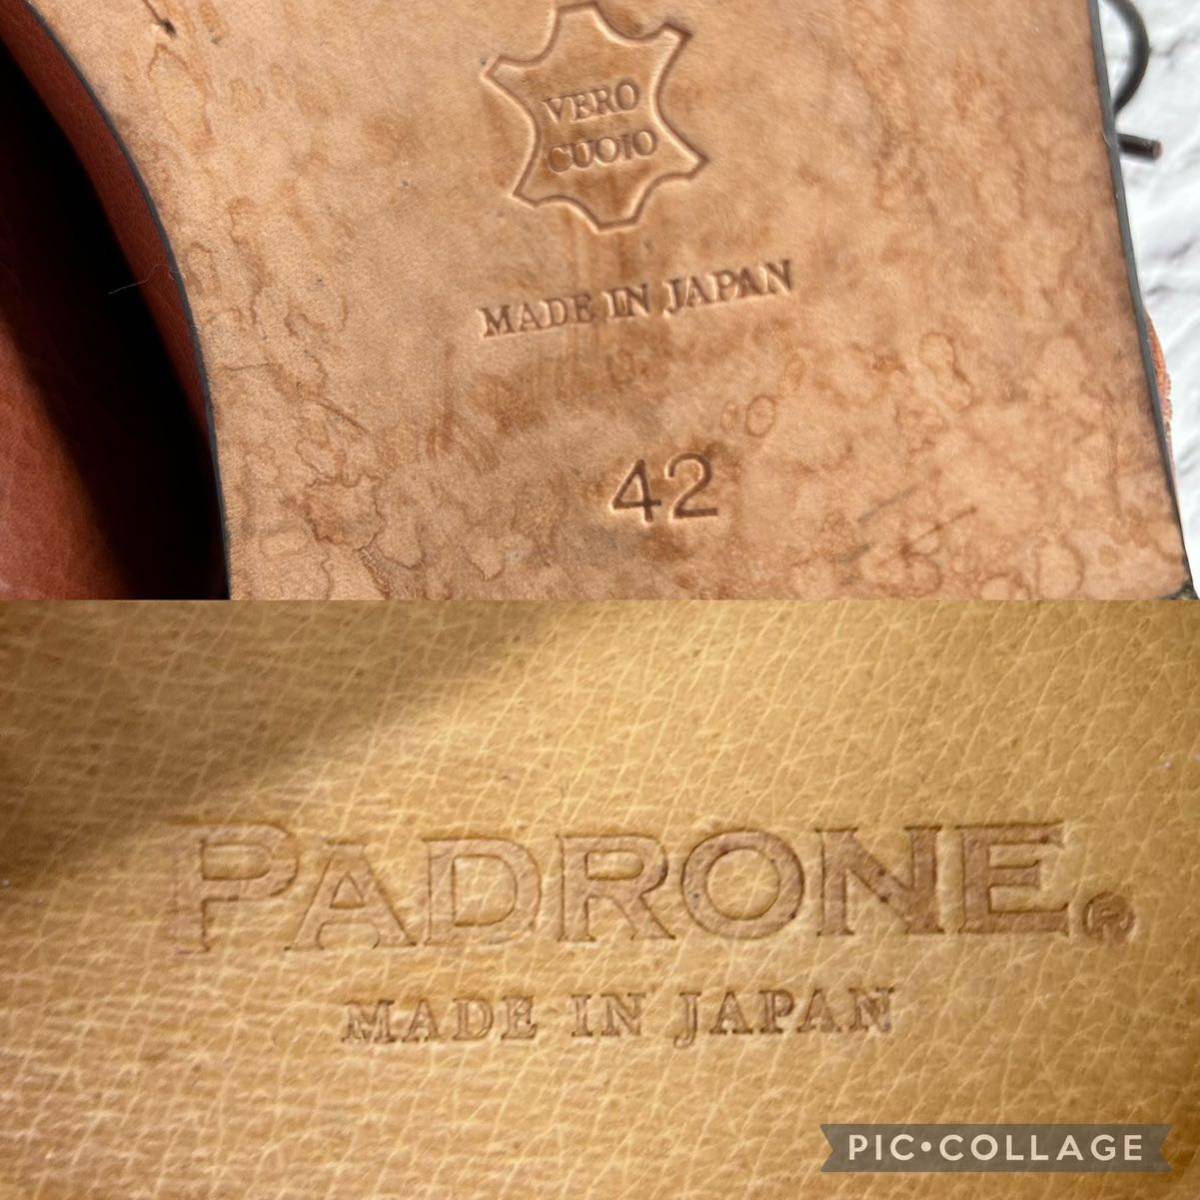 PADRONE パドローネ ダービープレーントゥ ブラウン 42 メンズ 27㎝相当 革靴 本革 レースアップ レザーシューズ 日本製_画像10